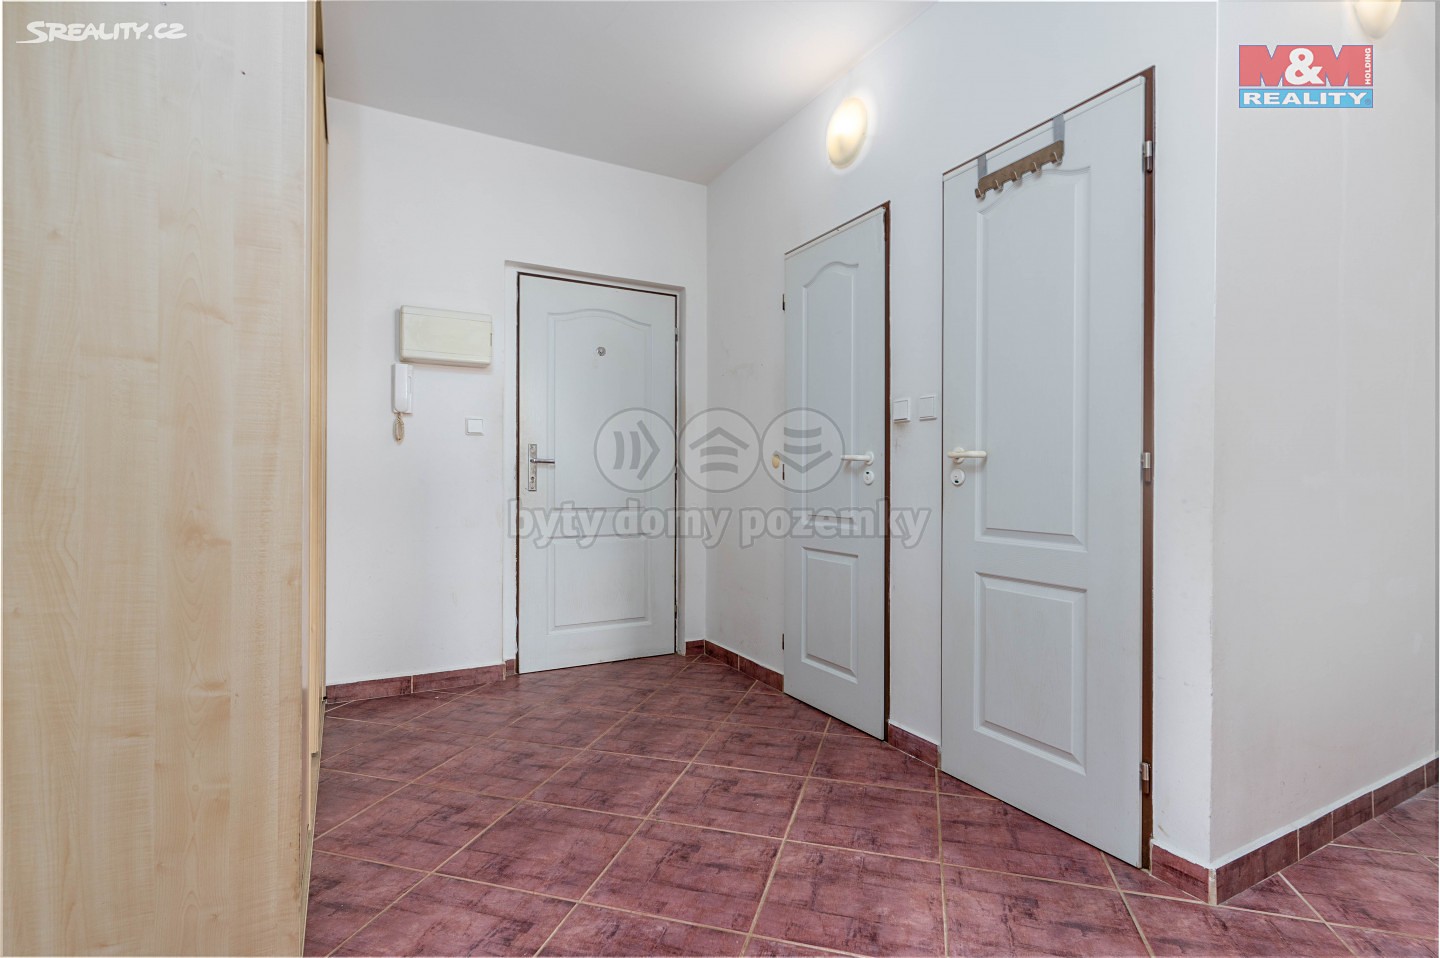 Prodej bytu 3+1 67 m², Krátká, Milovice - Boží Dar